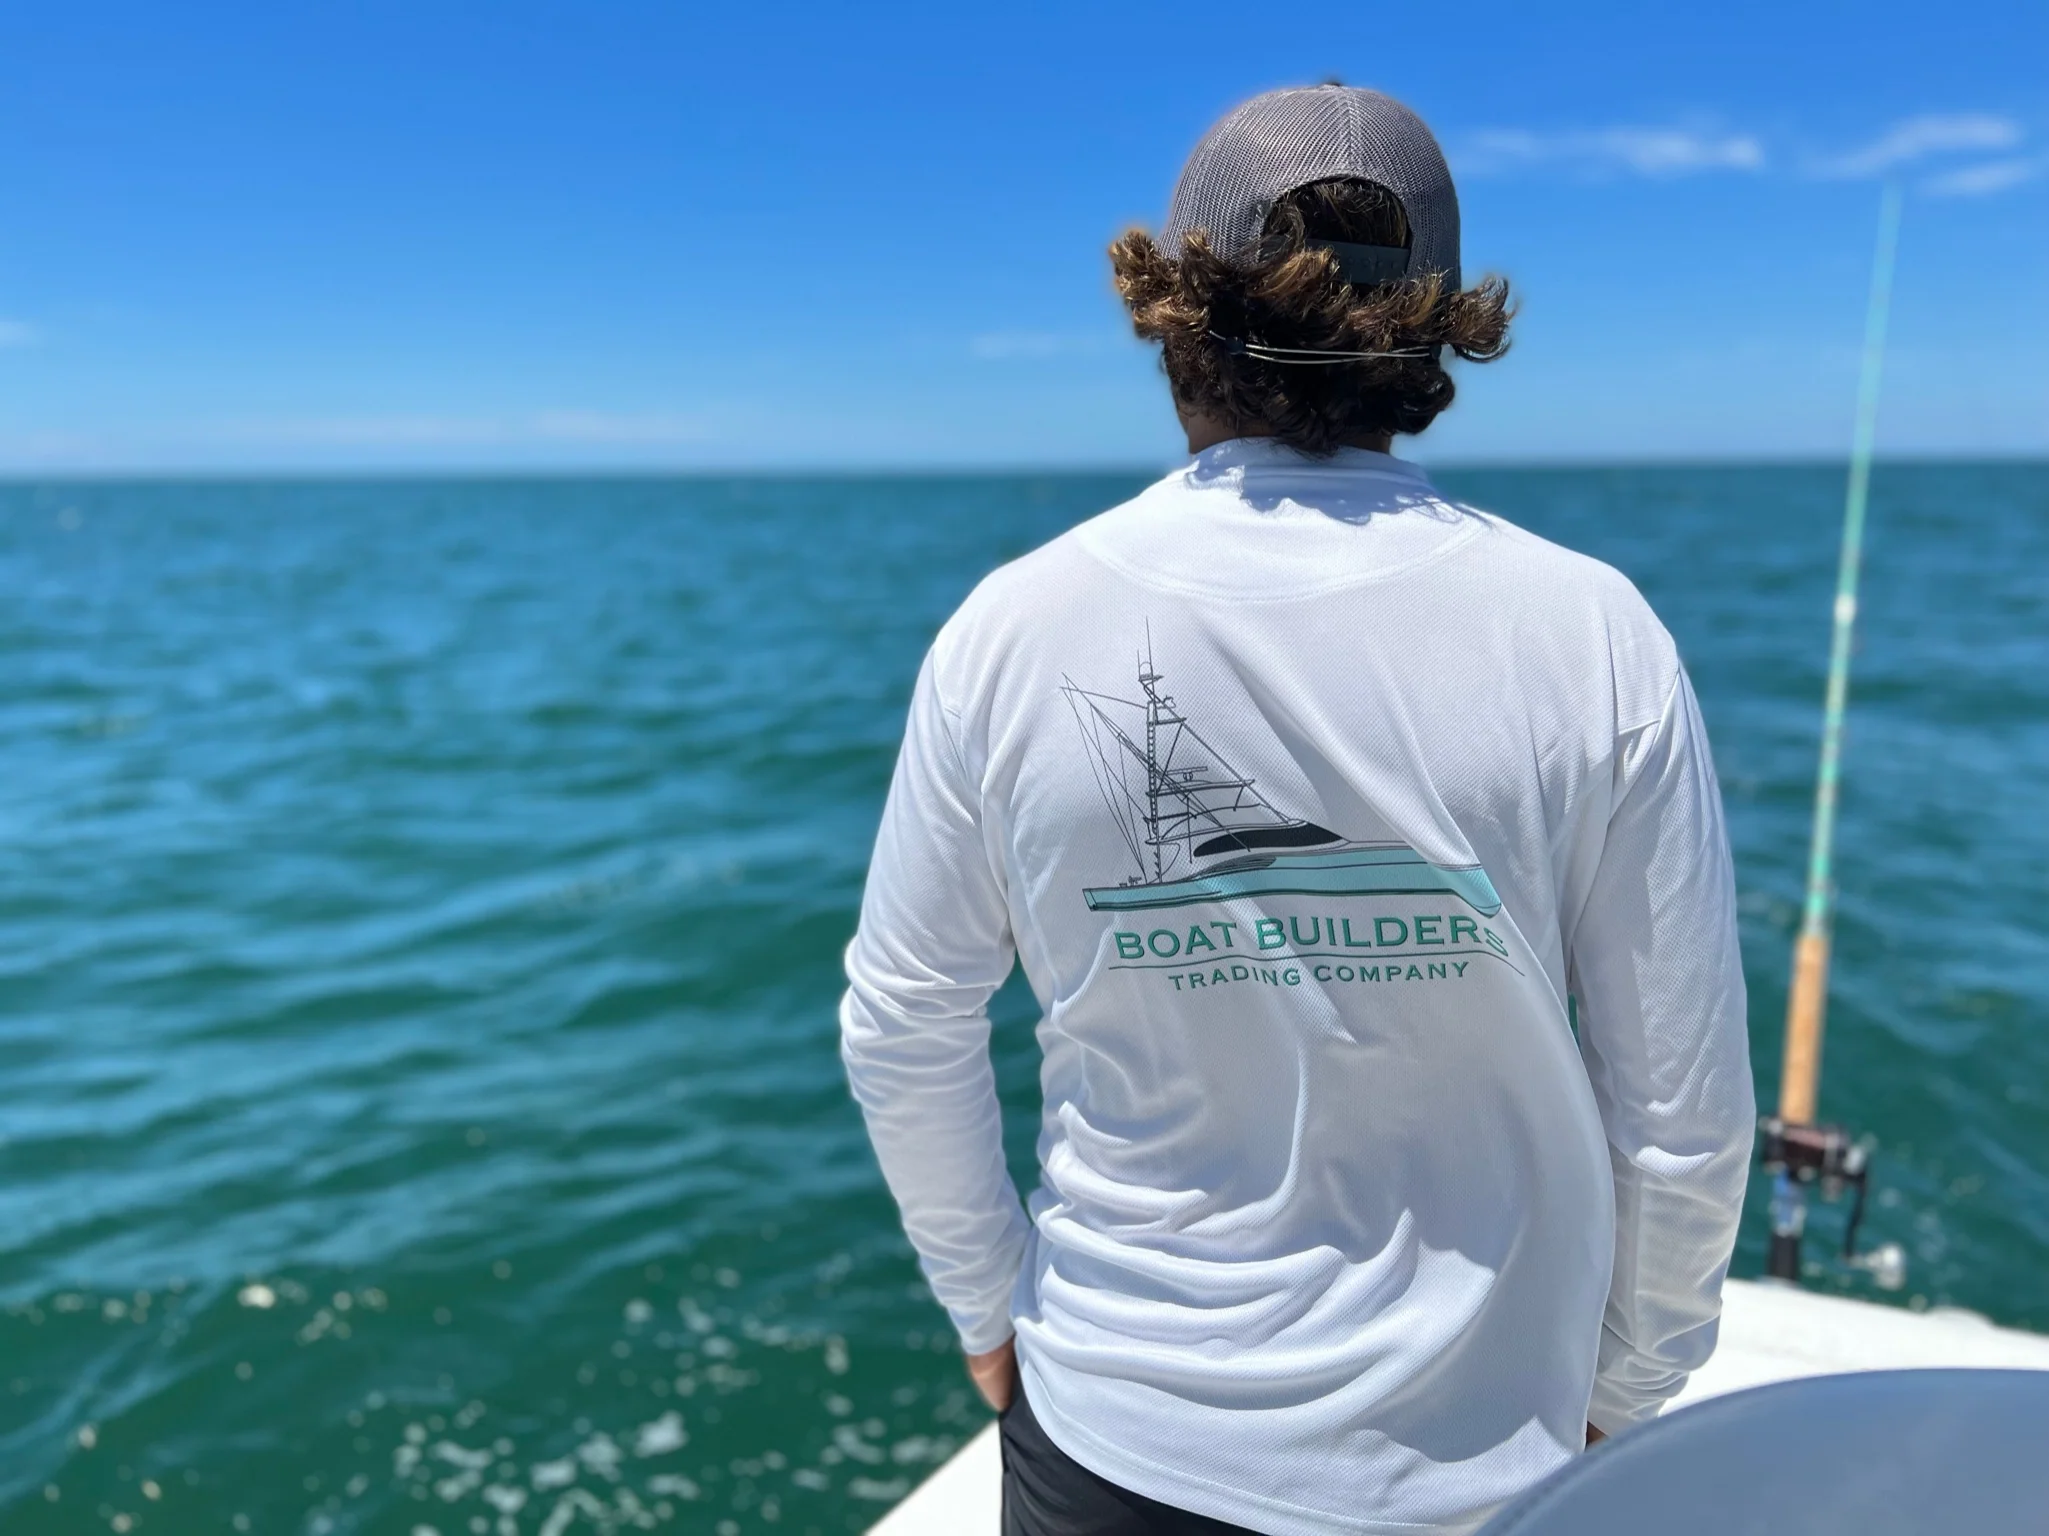 The AVID line of fishing shirts - Playa ibiza Puerto Rico